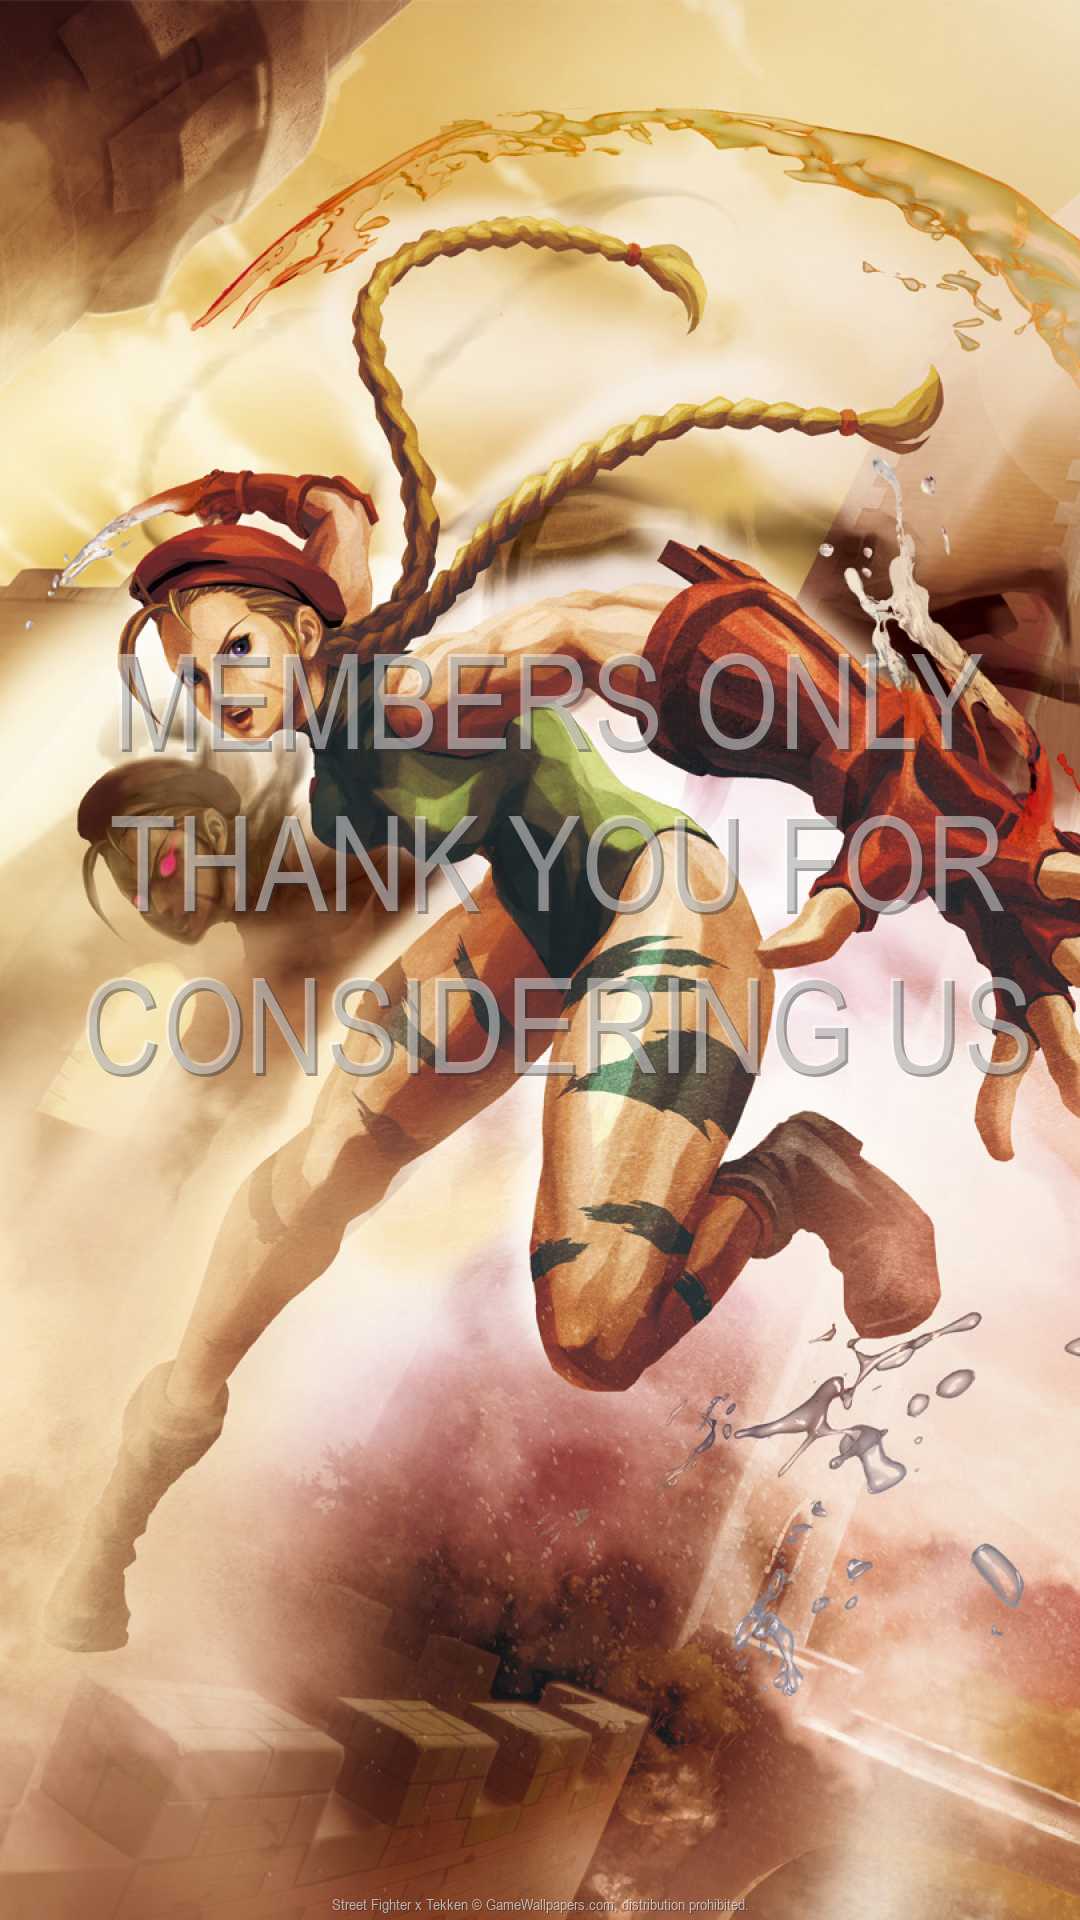 Street Fighter x Tekken 1080p Vertical Mobile wallpaper or background 01